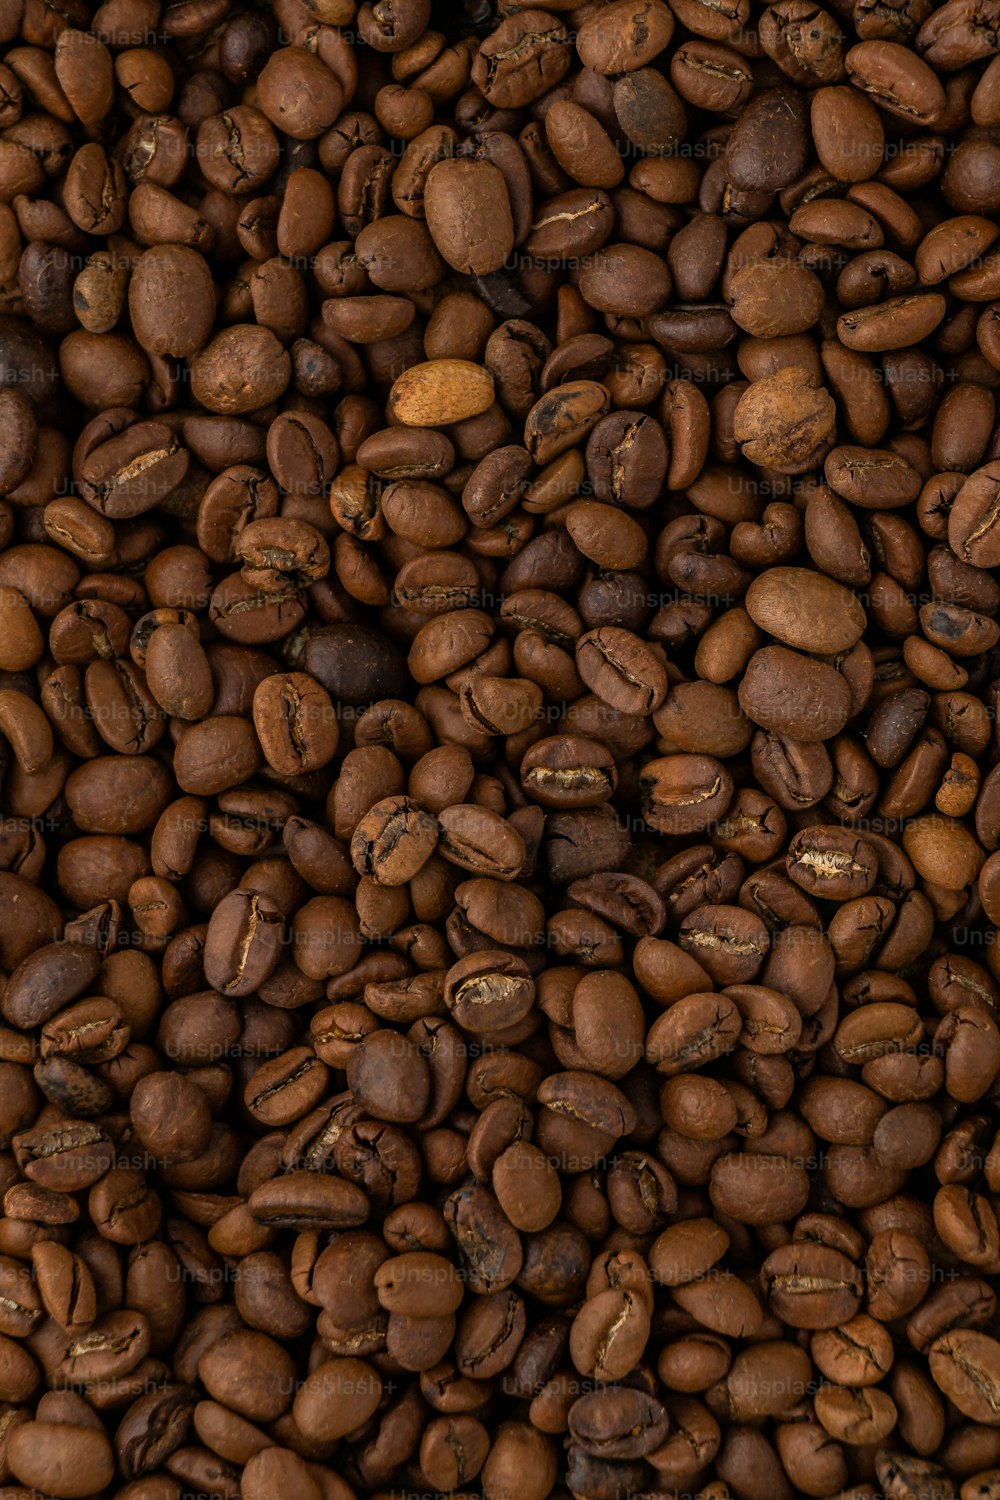 Viene mostrata una grande pila di chicchi di caffè